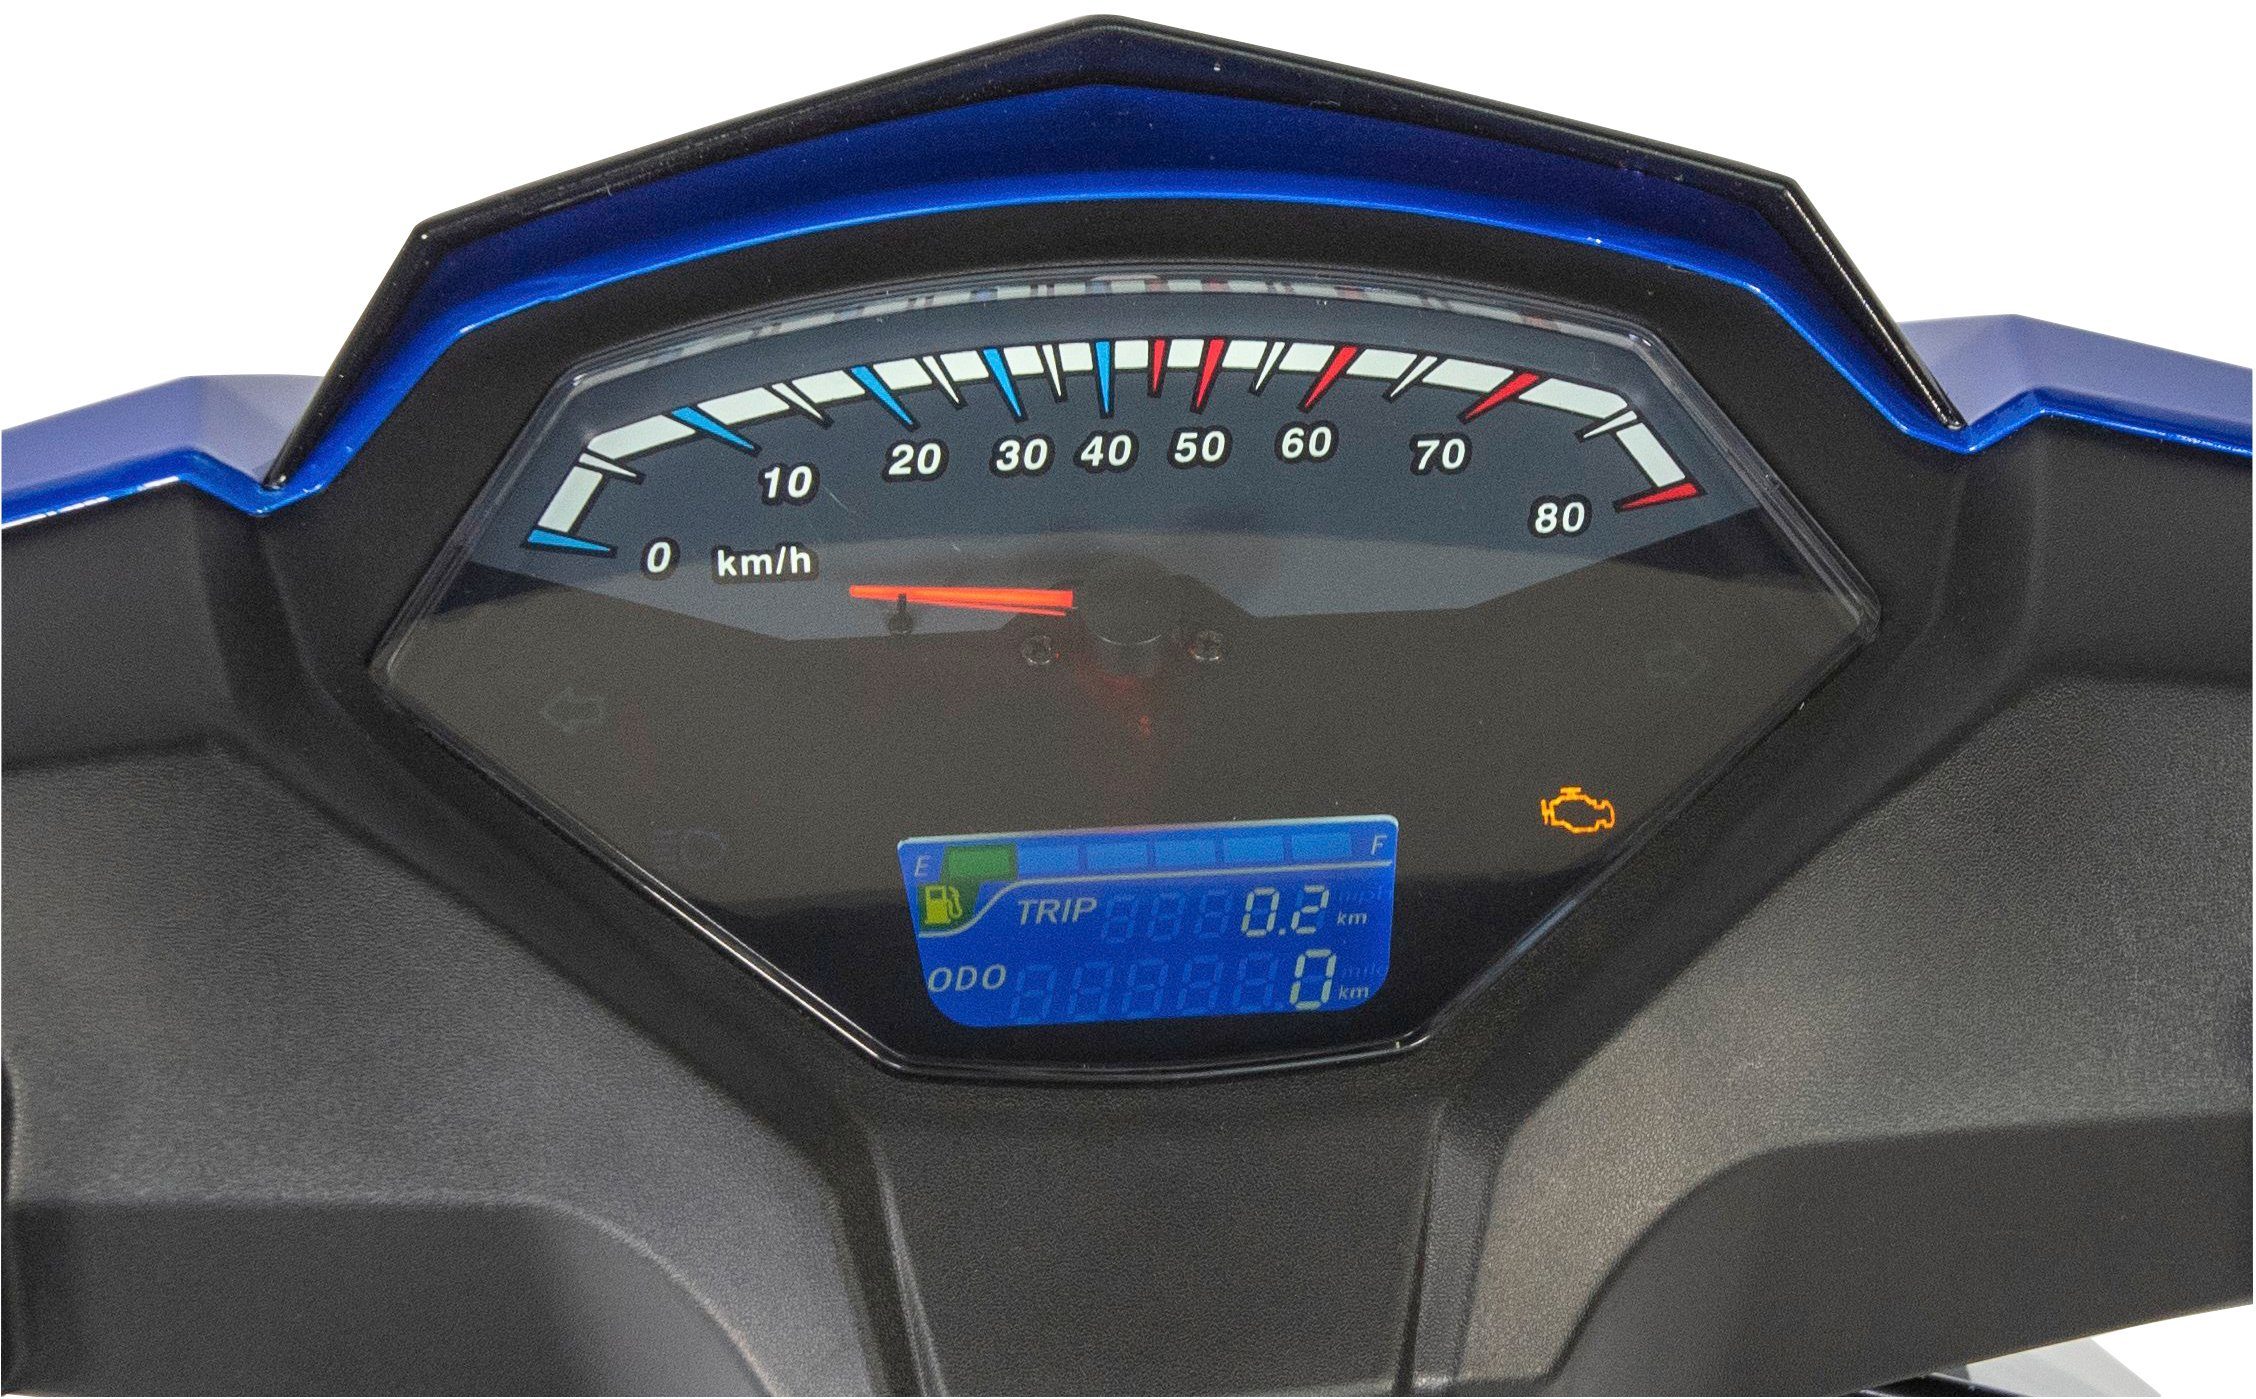 GT UNION Motorroller 50-45, Topcase (Komplett-Set, X königsblau-silber tlg., mit Euro 2 Topcase), 50 km/h, 5, ccm, inkl. Sonic 45